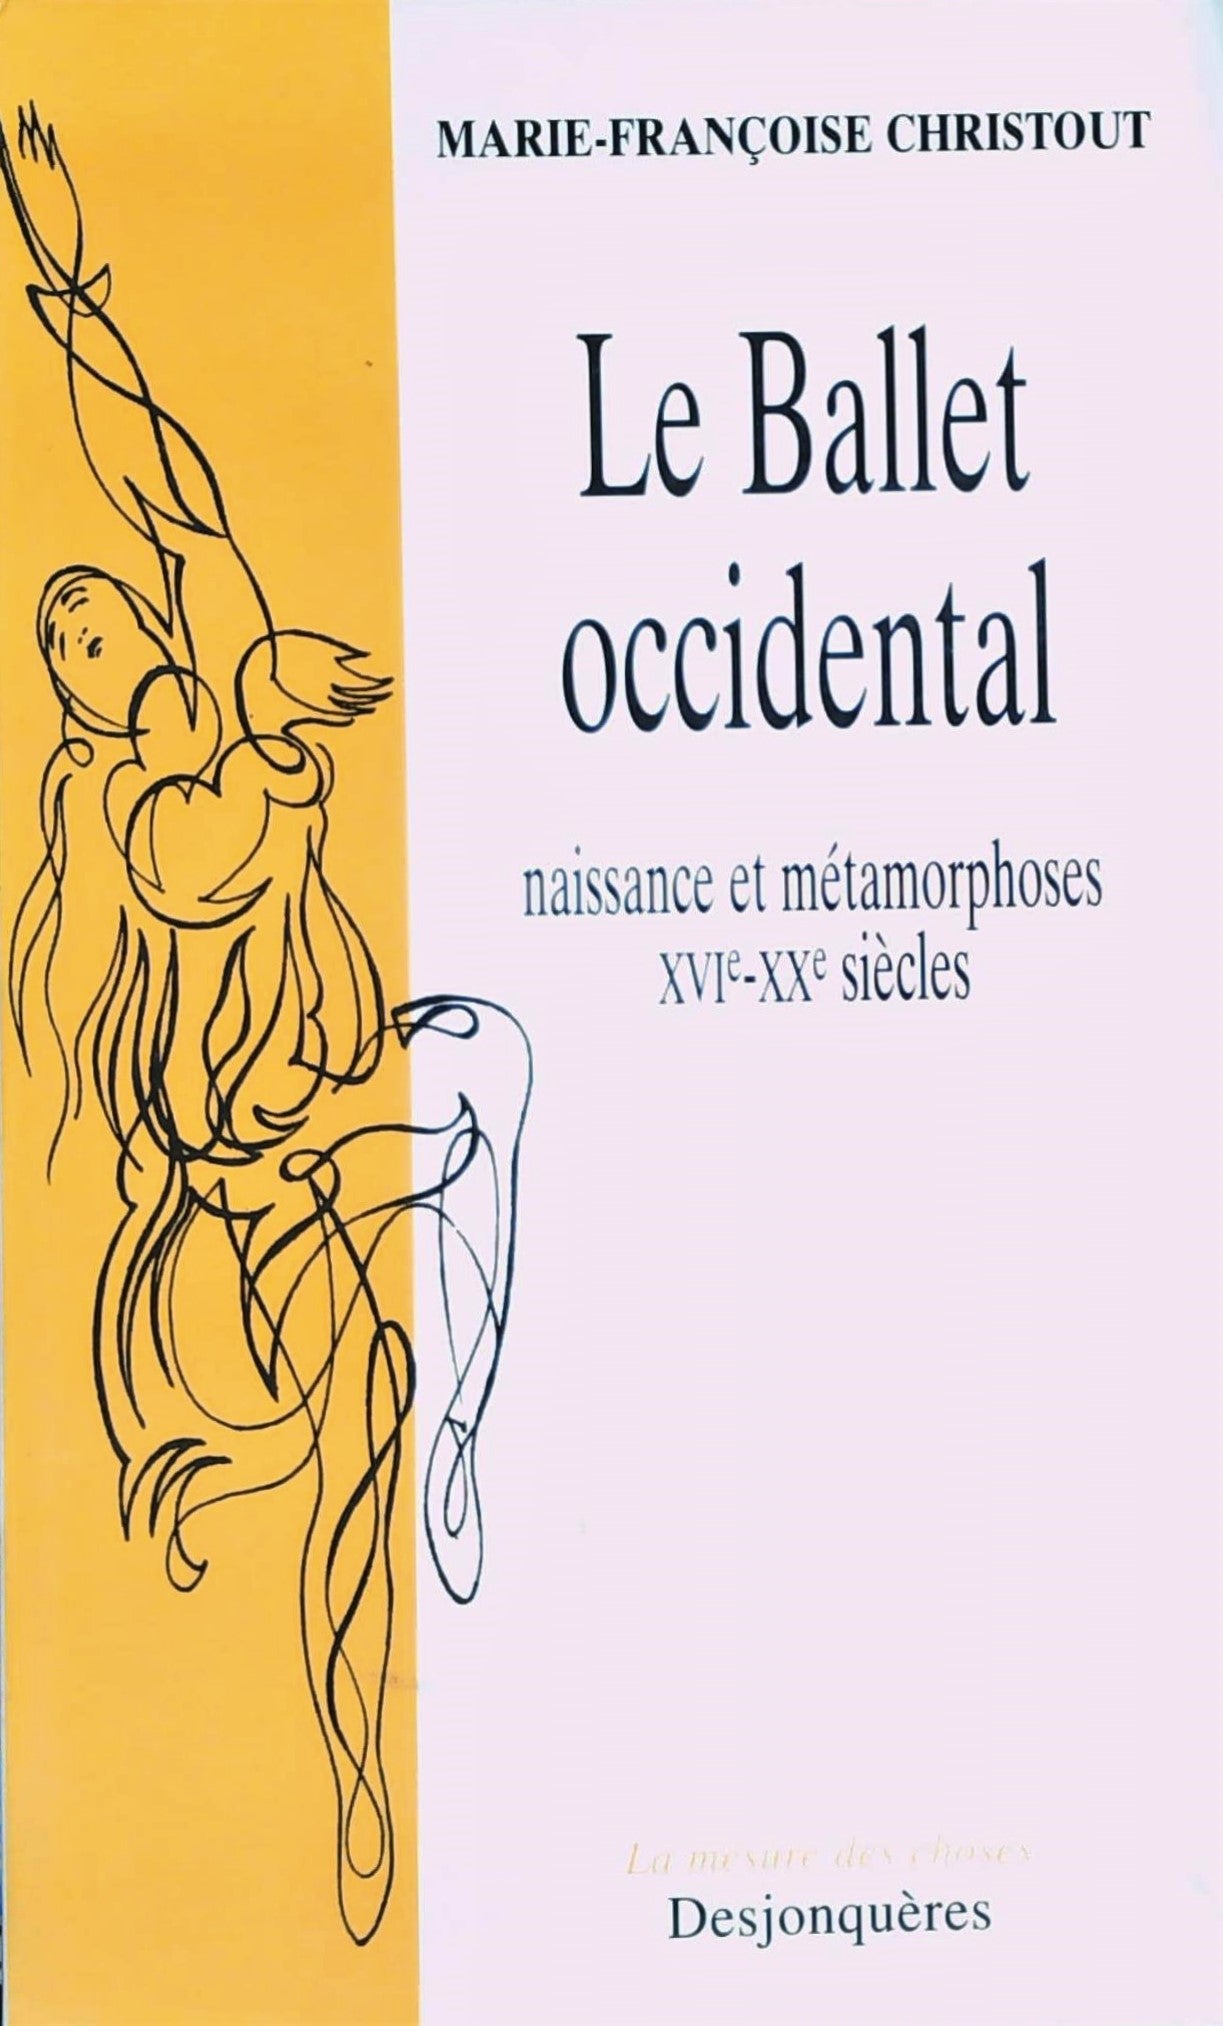 Livre ISBN 2904227873 Le Ballet occidental : Naissance et métammorphoses XVIe-XXe siècles (Marie-Françoise Christout)